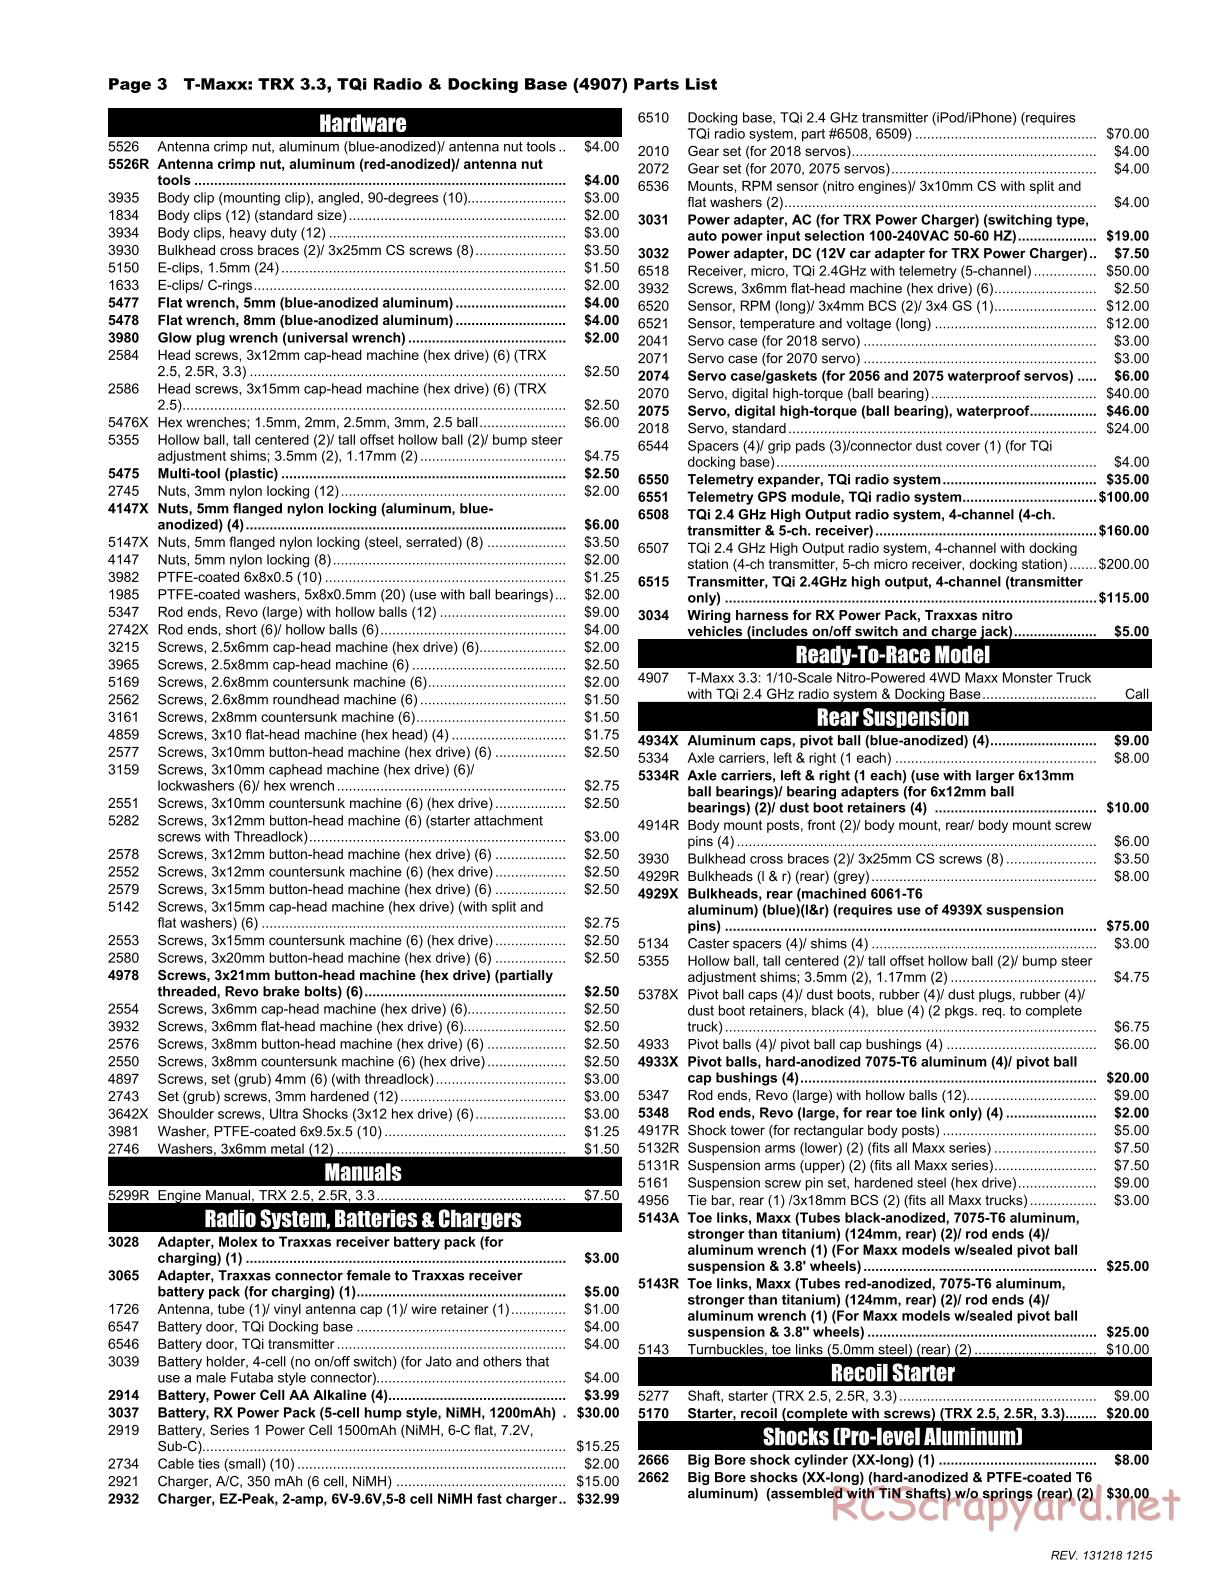 Traxxas - T-Maxx 3.3 (2010) - Parts List - Page 3